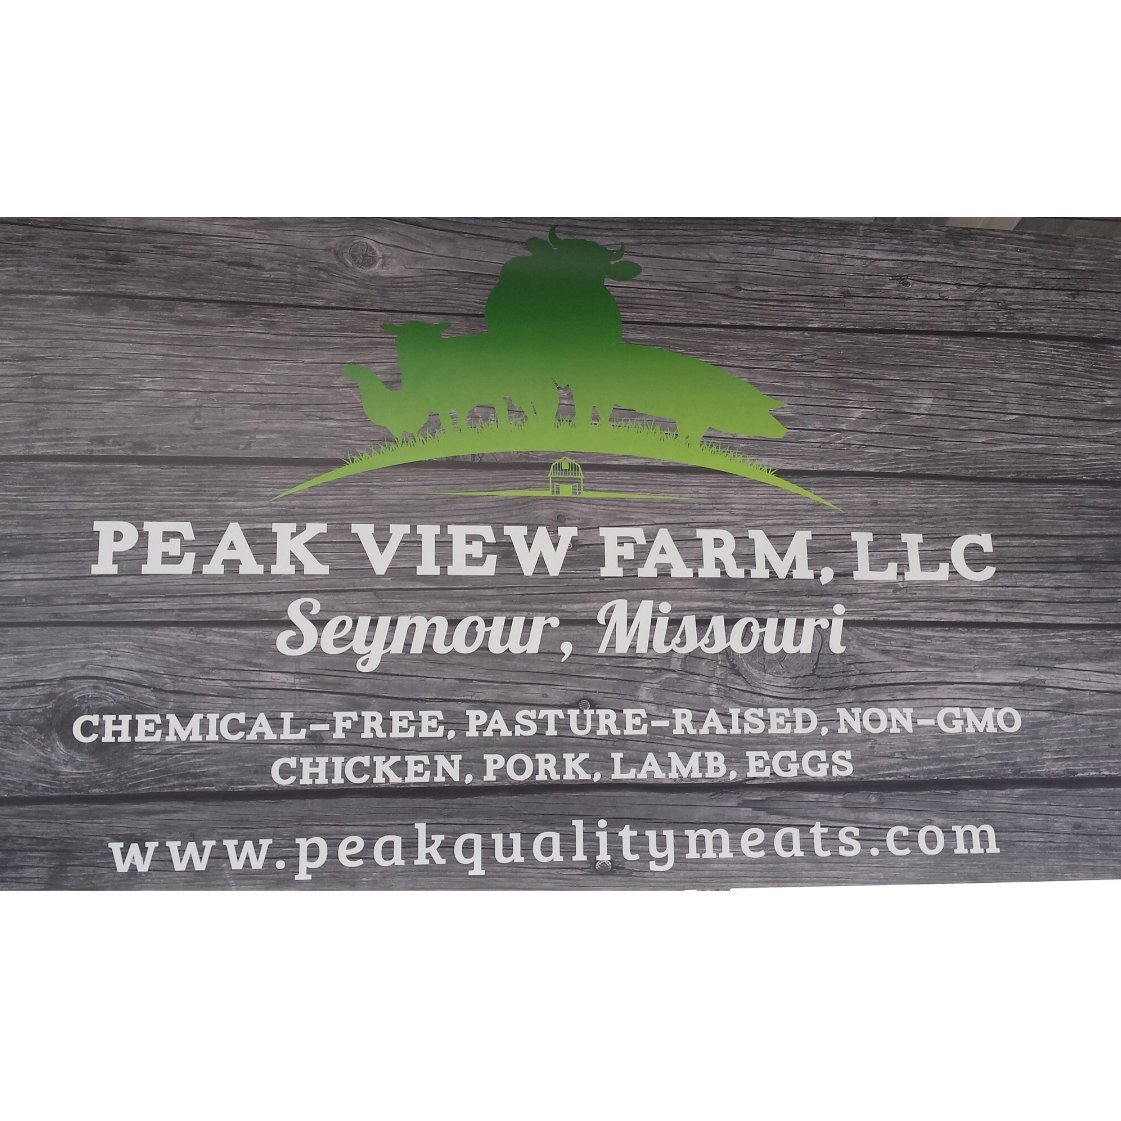 Pasture raised, non-GMO chicken, pork, lamb, and eggs. Raising local food in the Ozarks. Use the hashtag #peakviewfarm